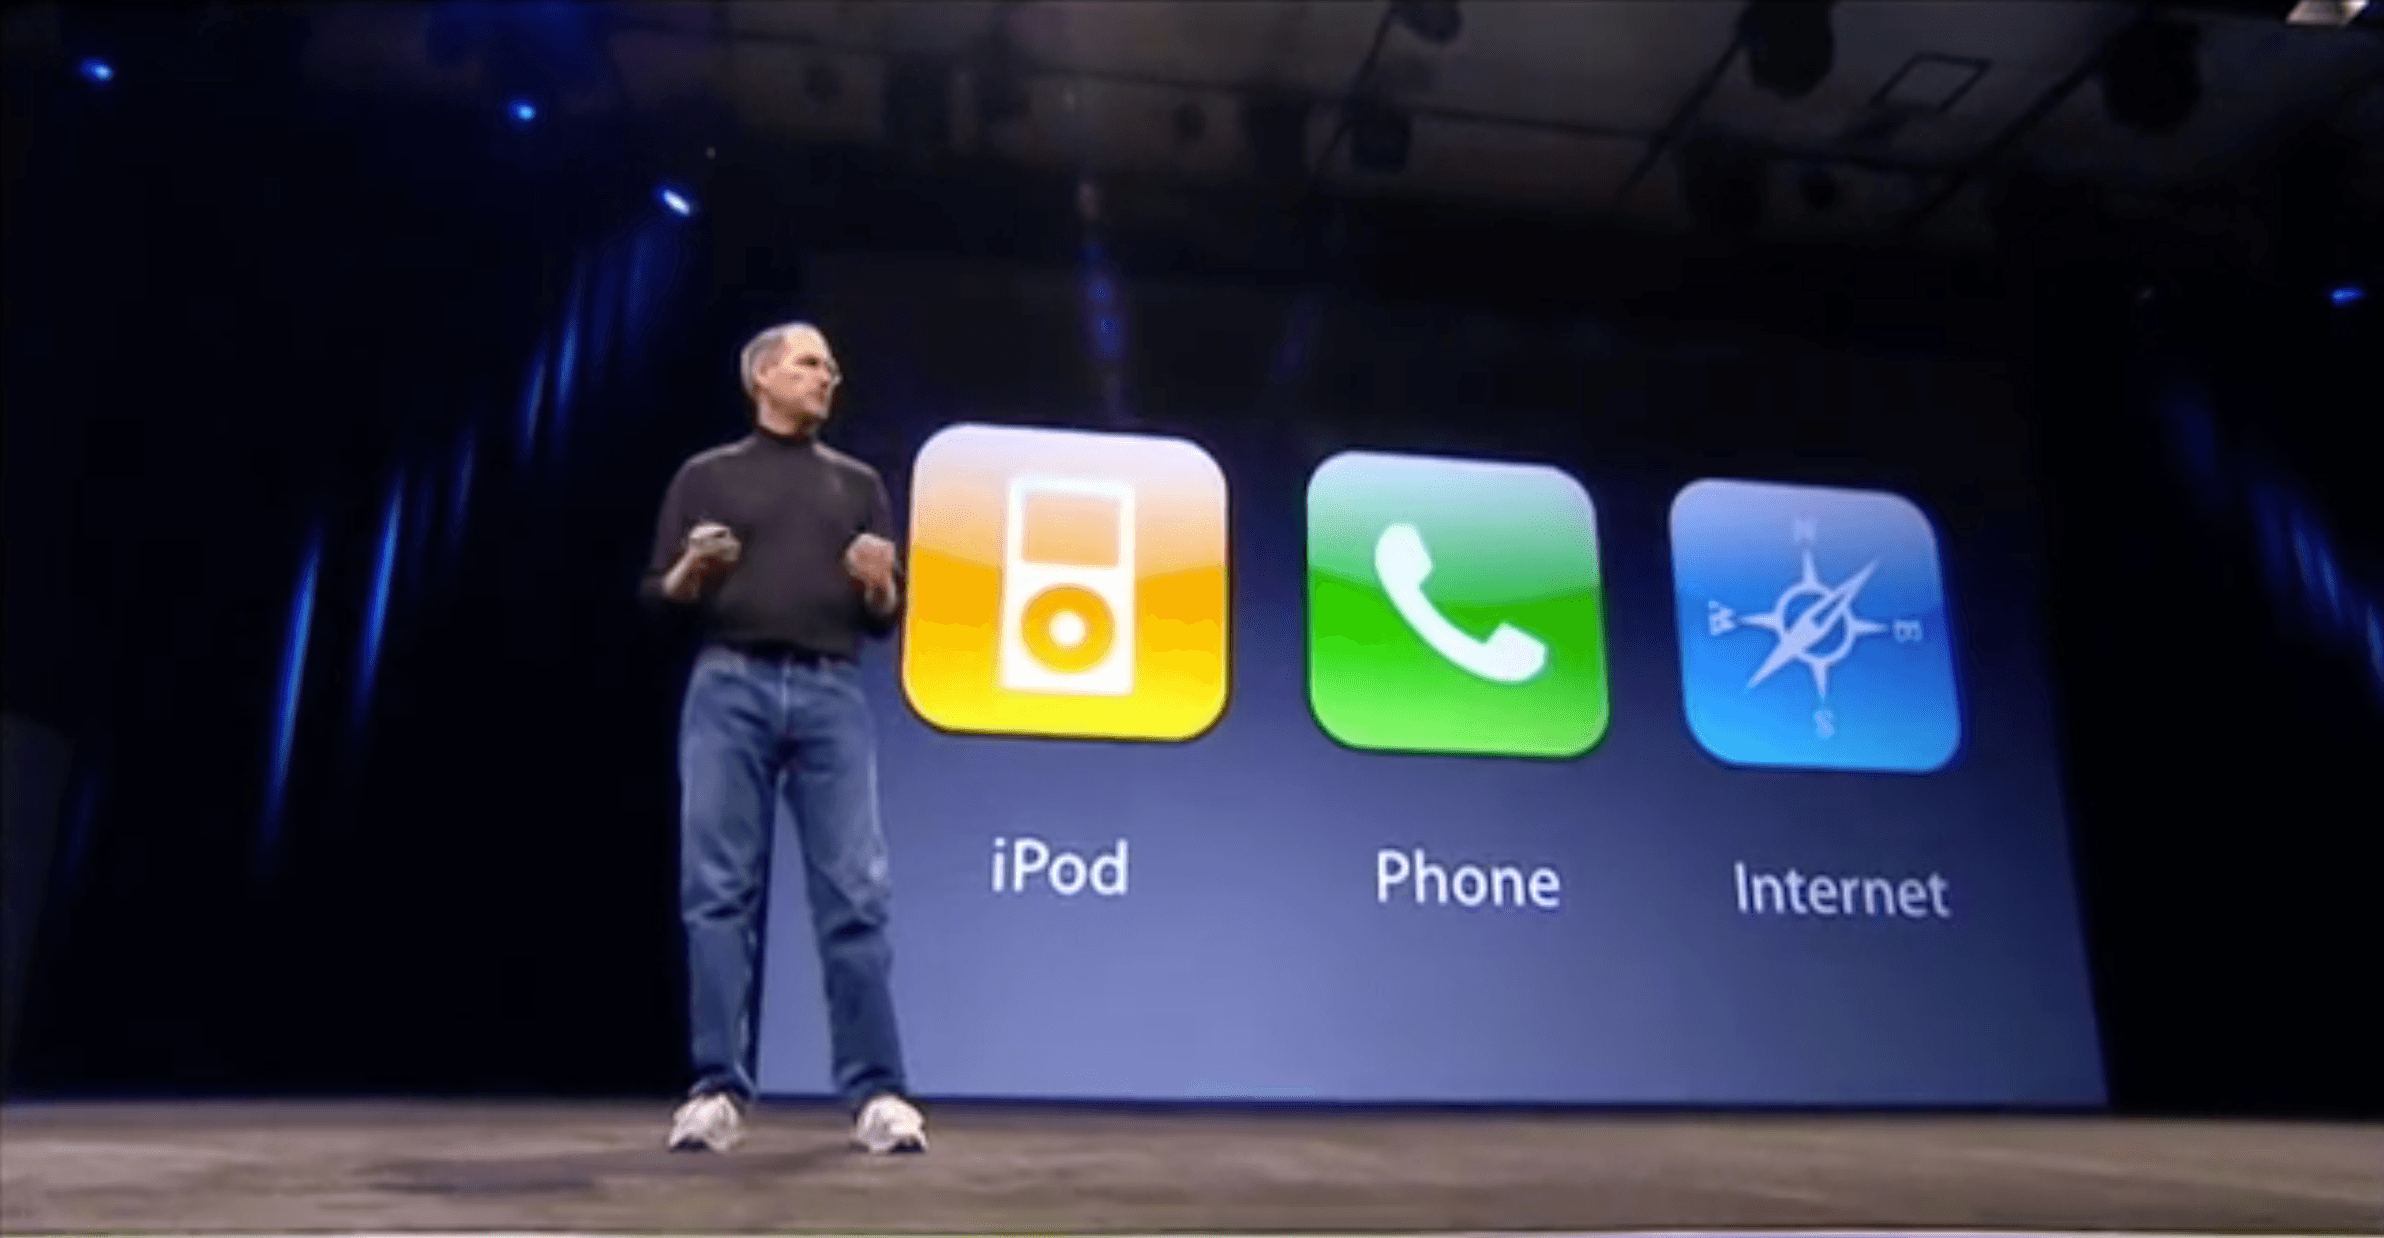 "An iPod, a phone and an Internet communicator"